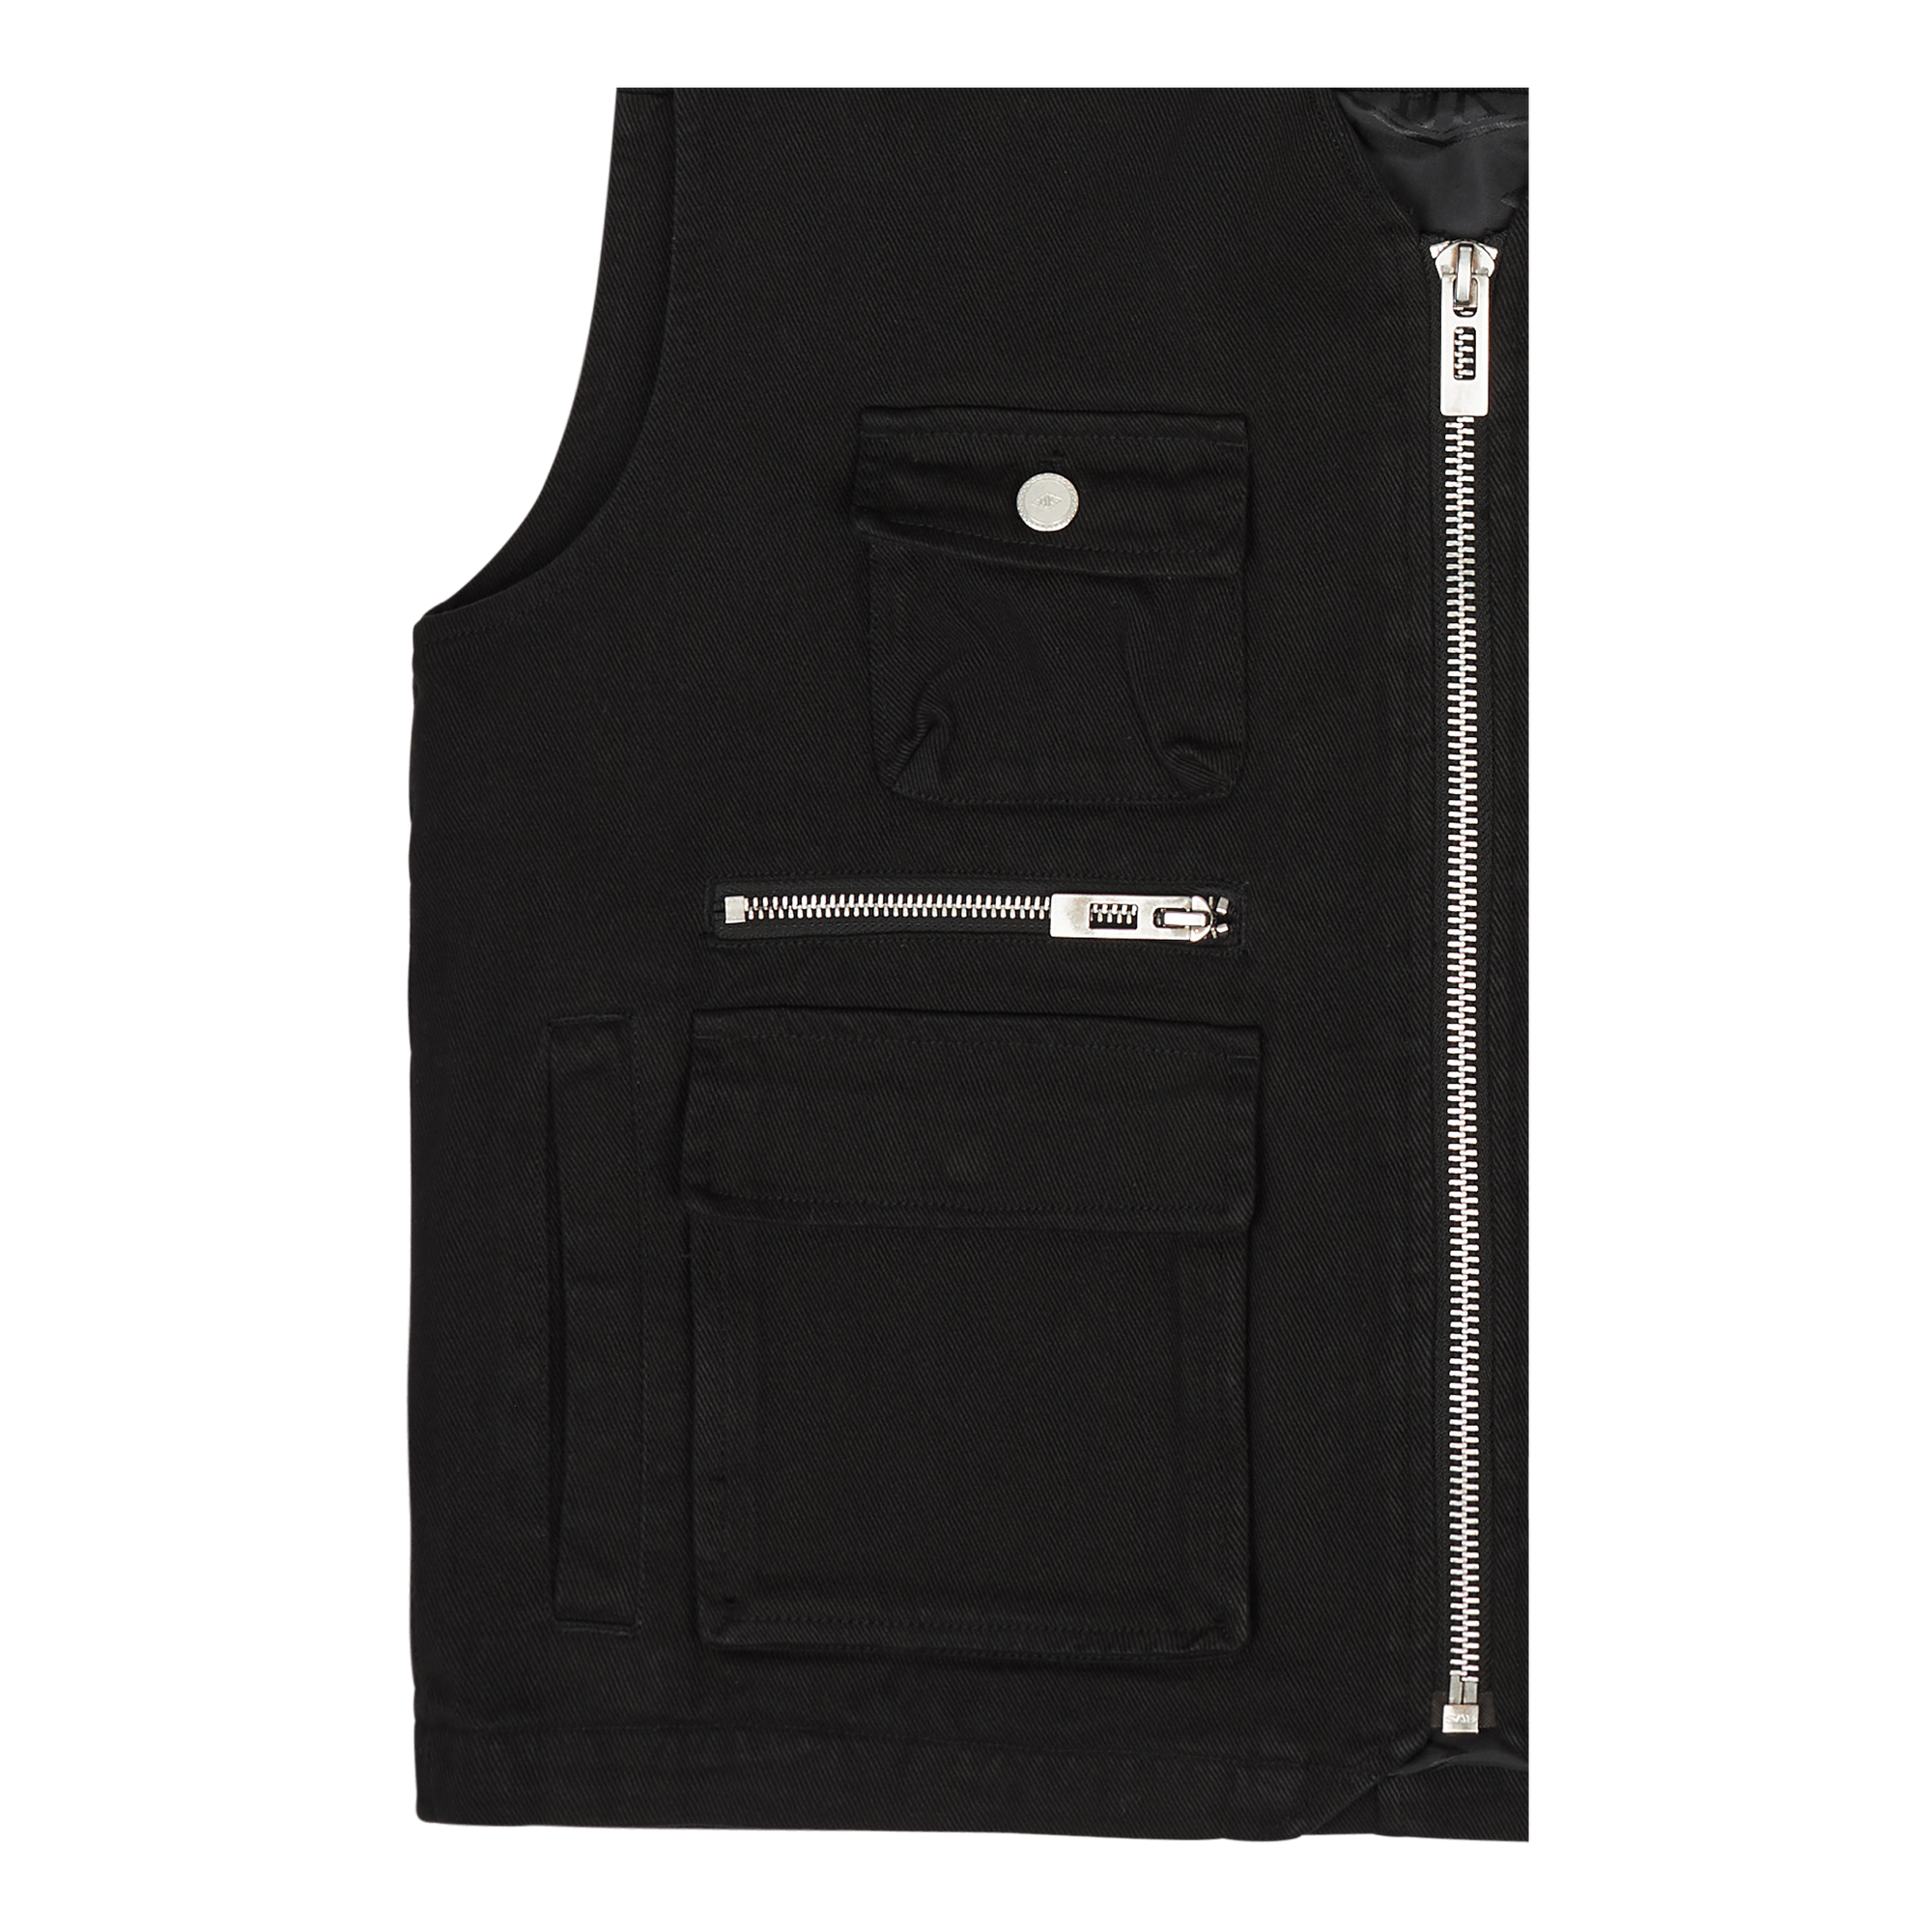 Cargo Vest Black